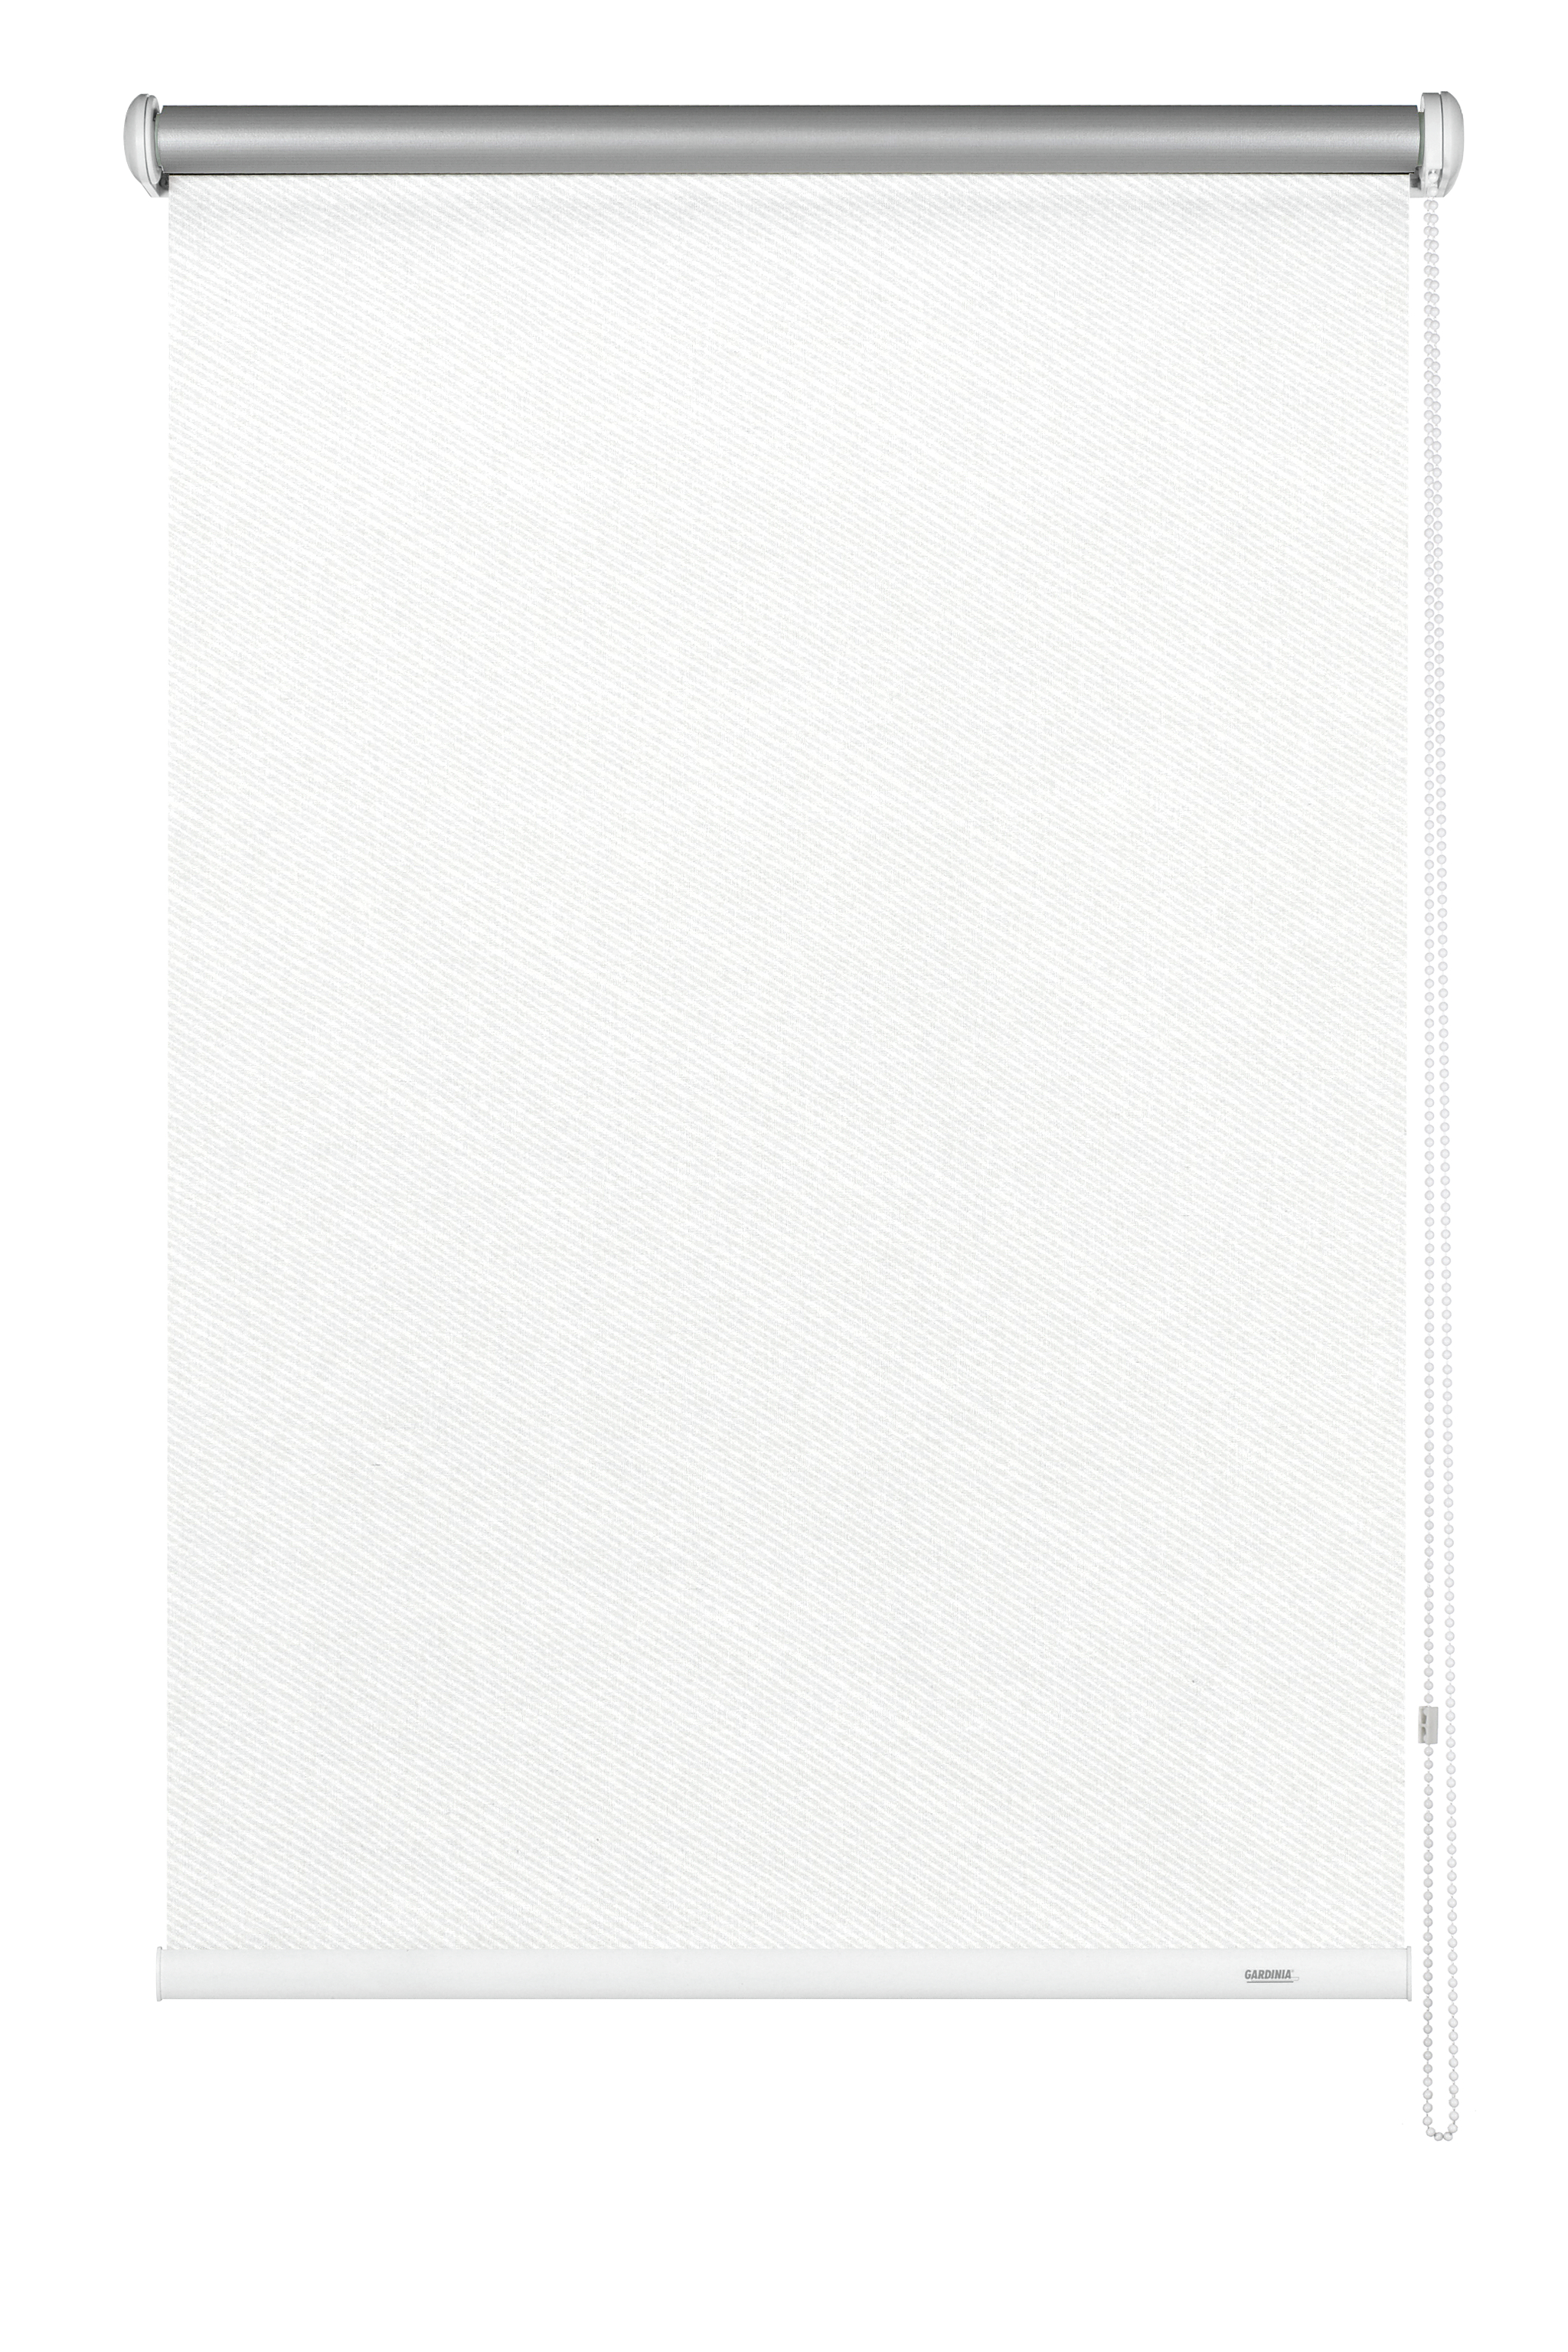 GARDINIA - Seitenzugrollo Thermo Streifen 92x180cm weiß